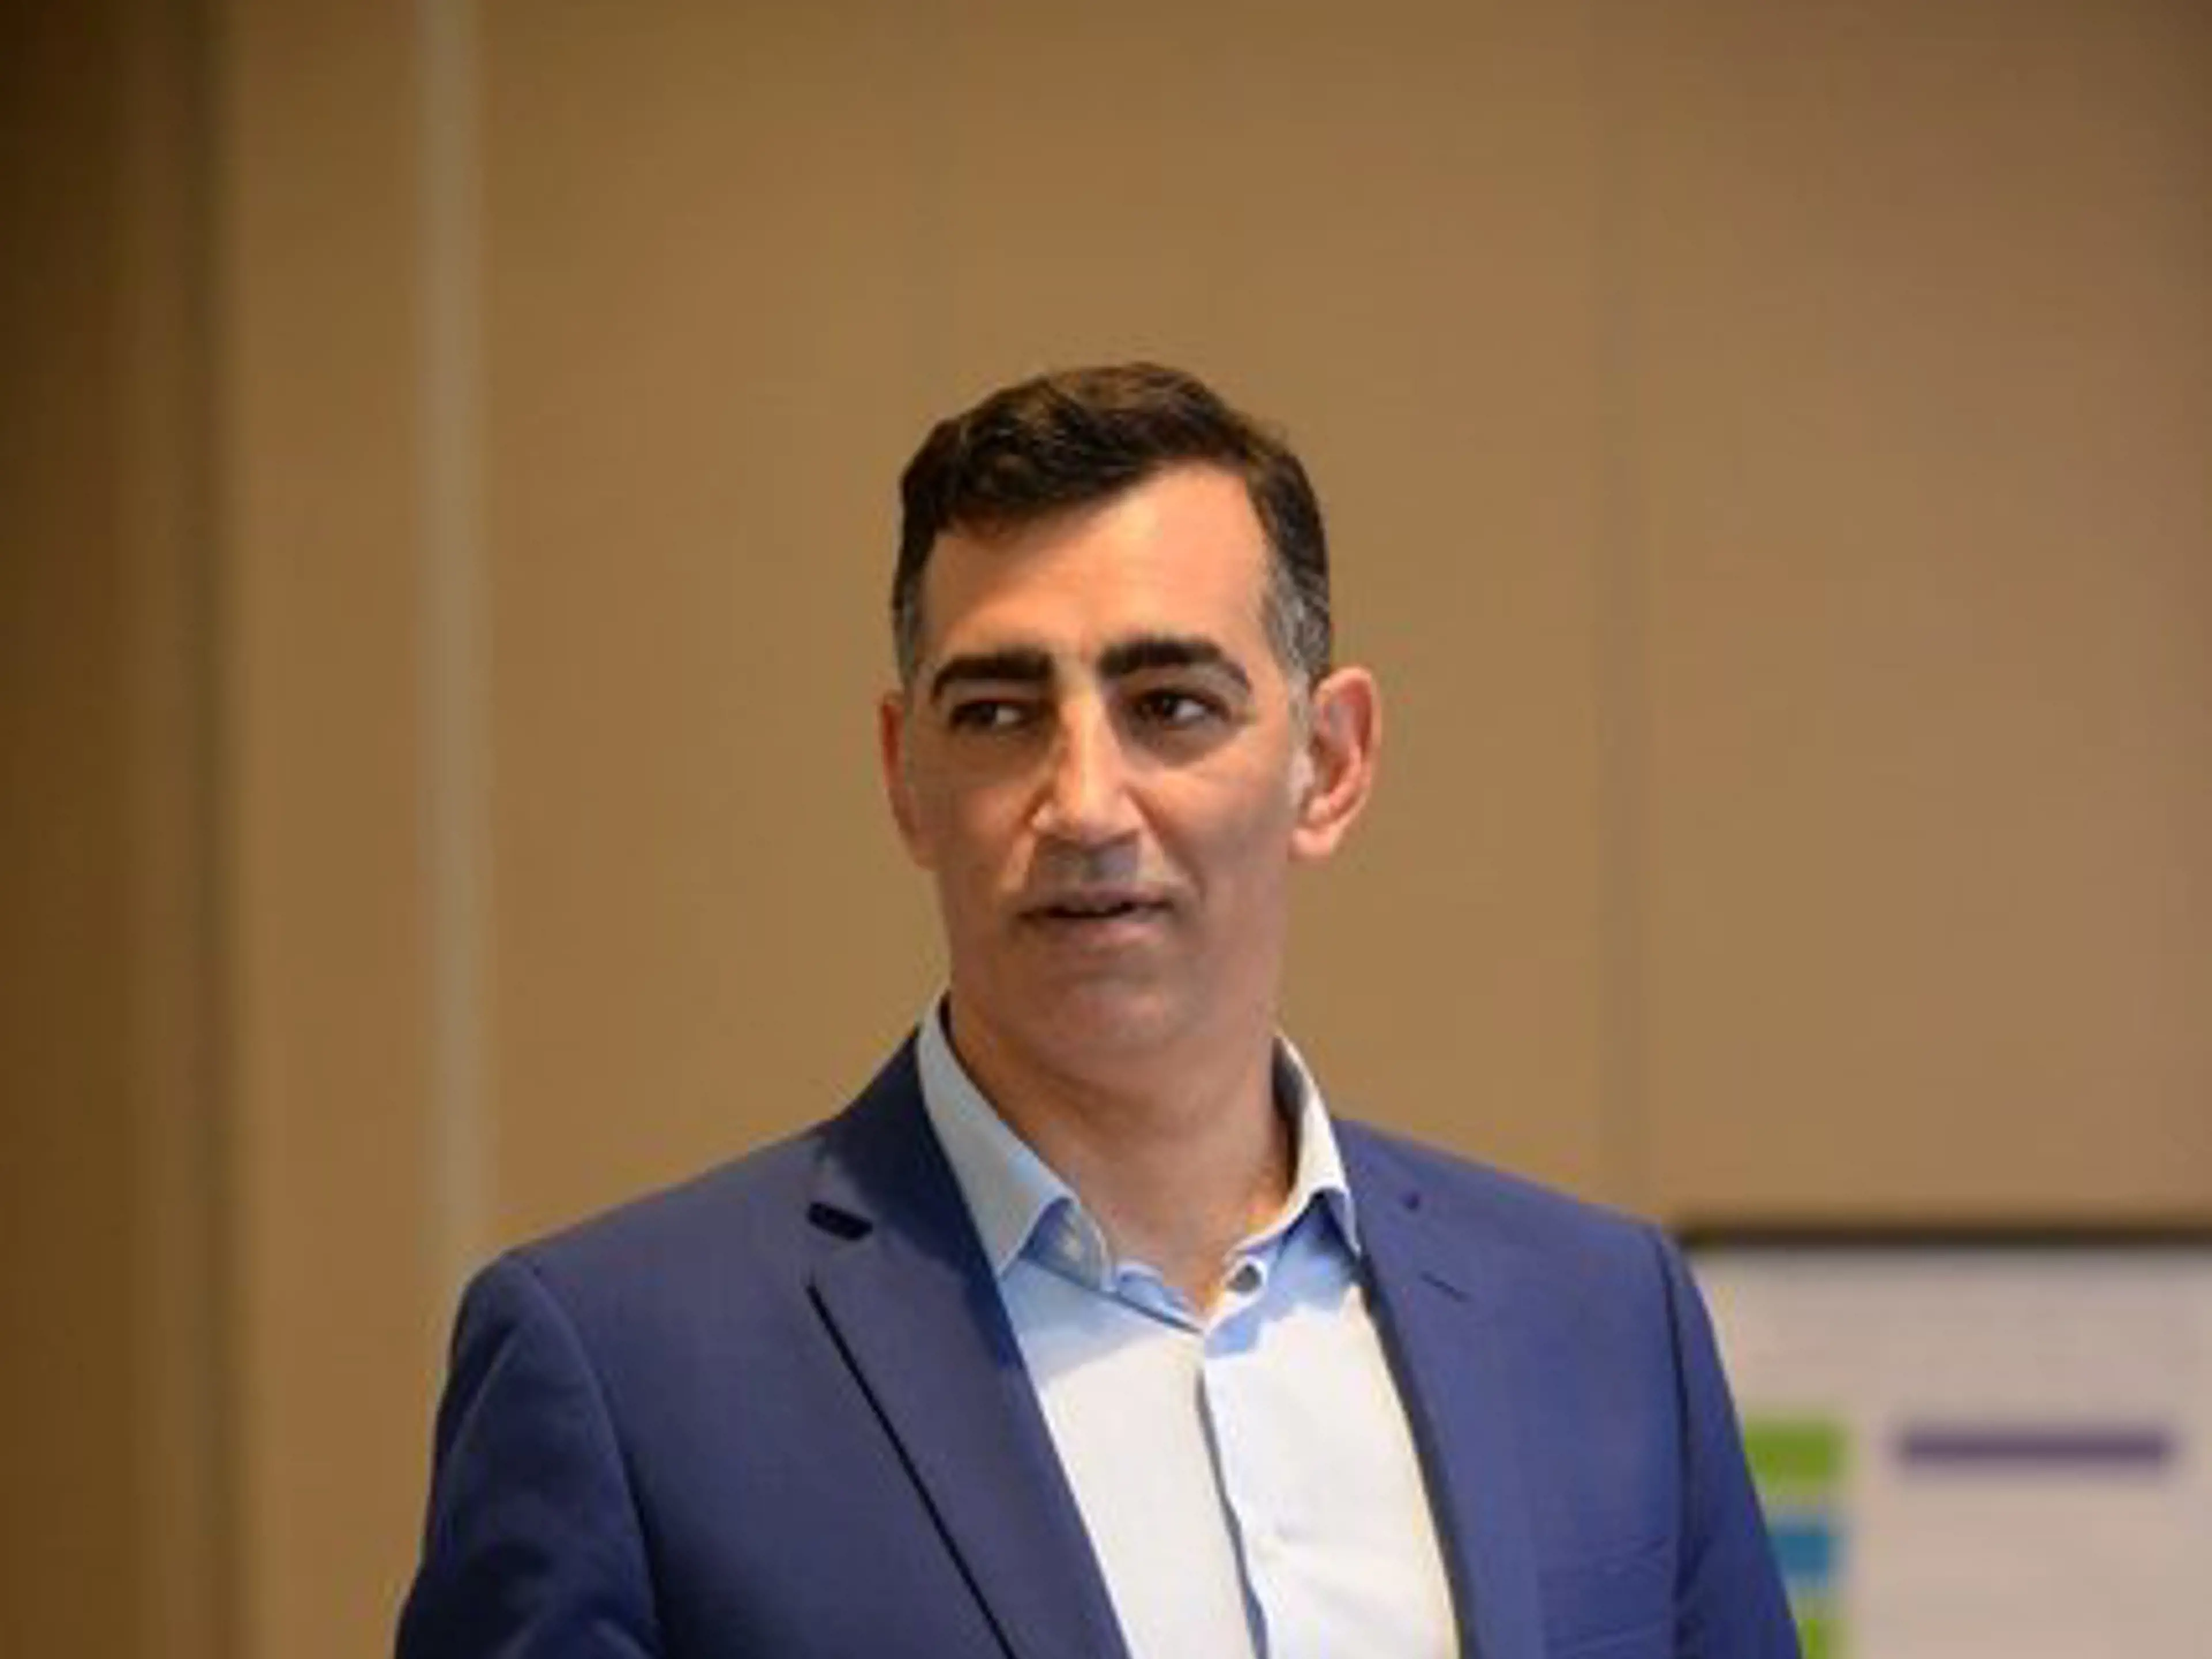 Portrait of Yiannis Pastellas, Blue MBA Ambassador